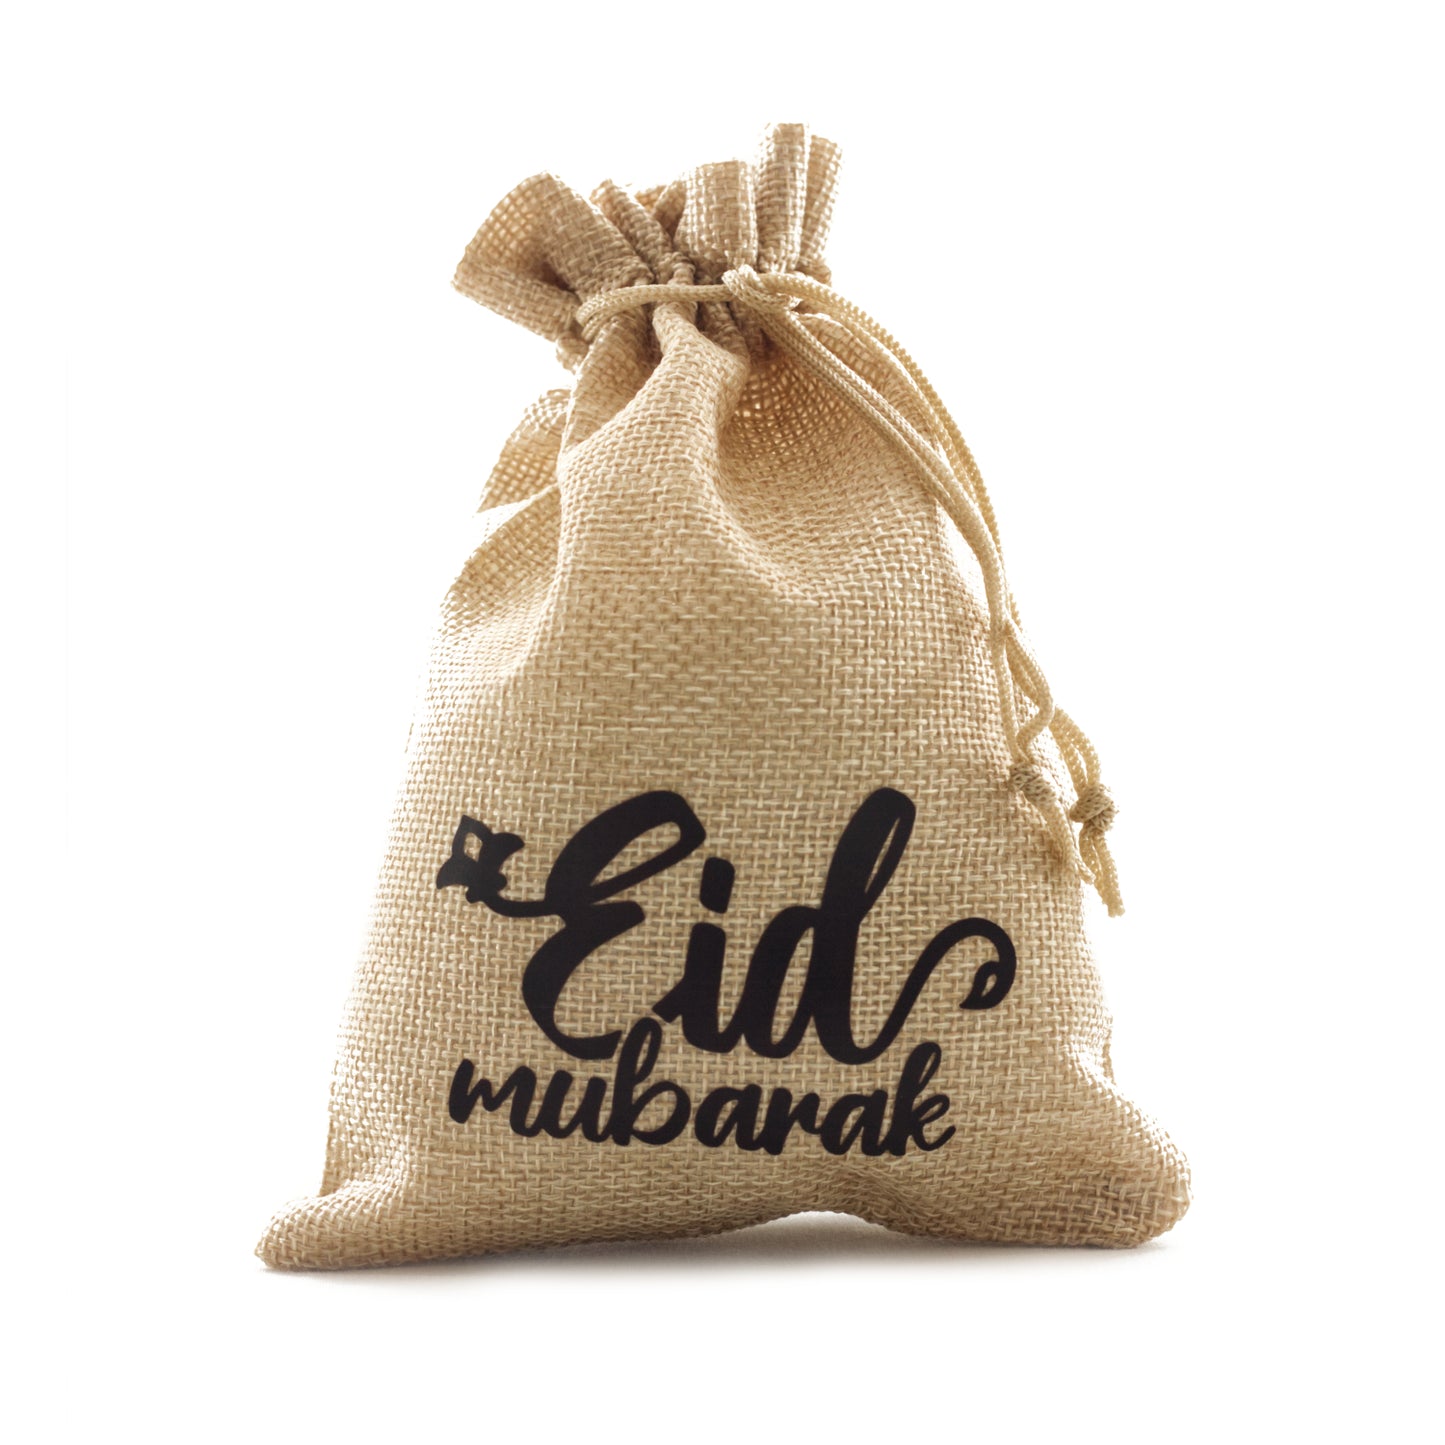 Eid Mubarak Gift Pouches - Beige - Pack of 5